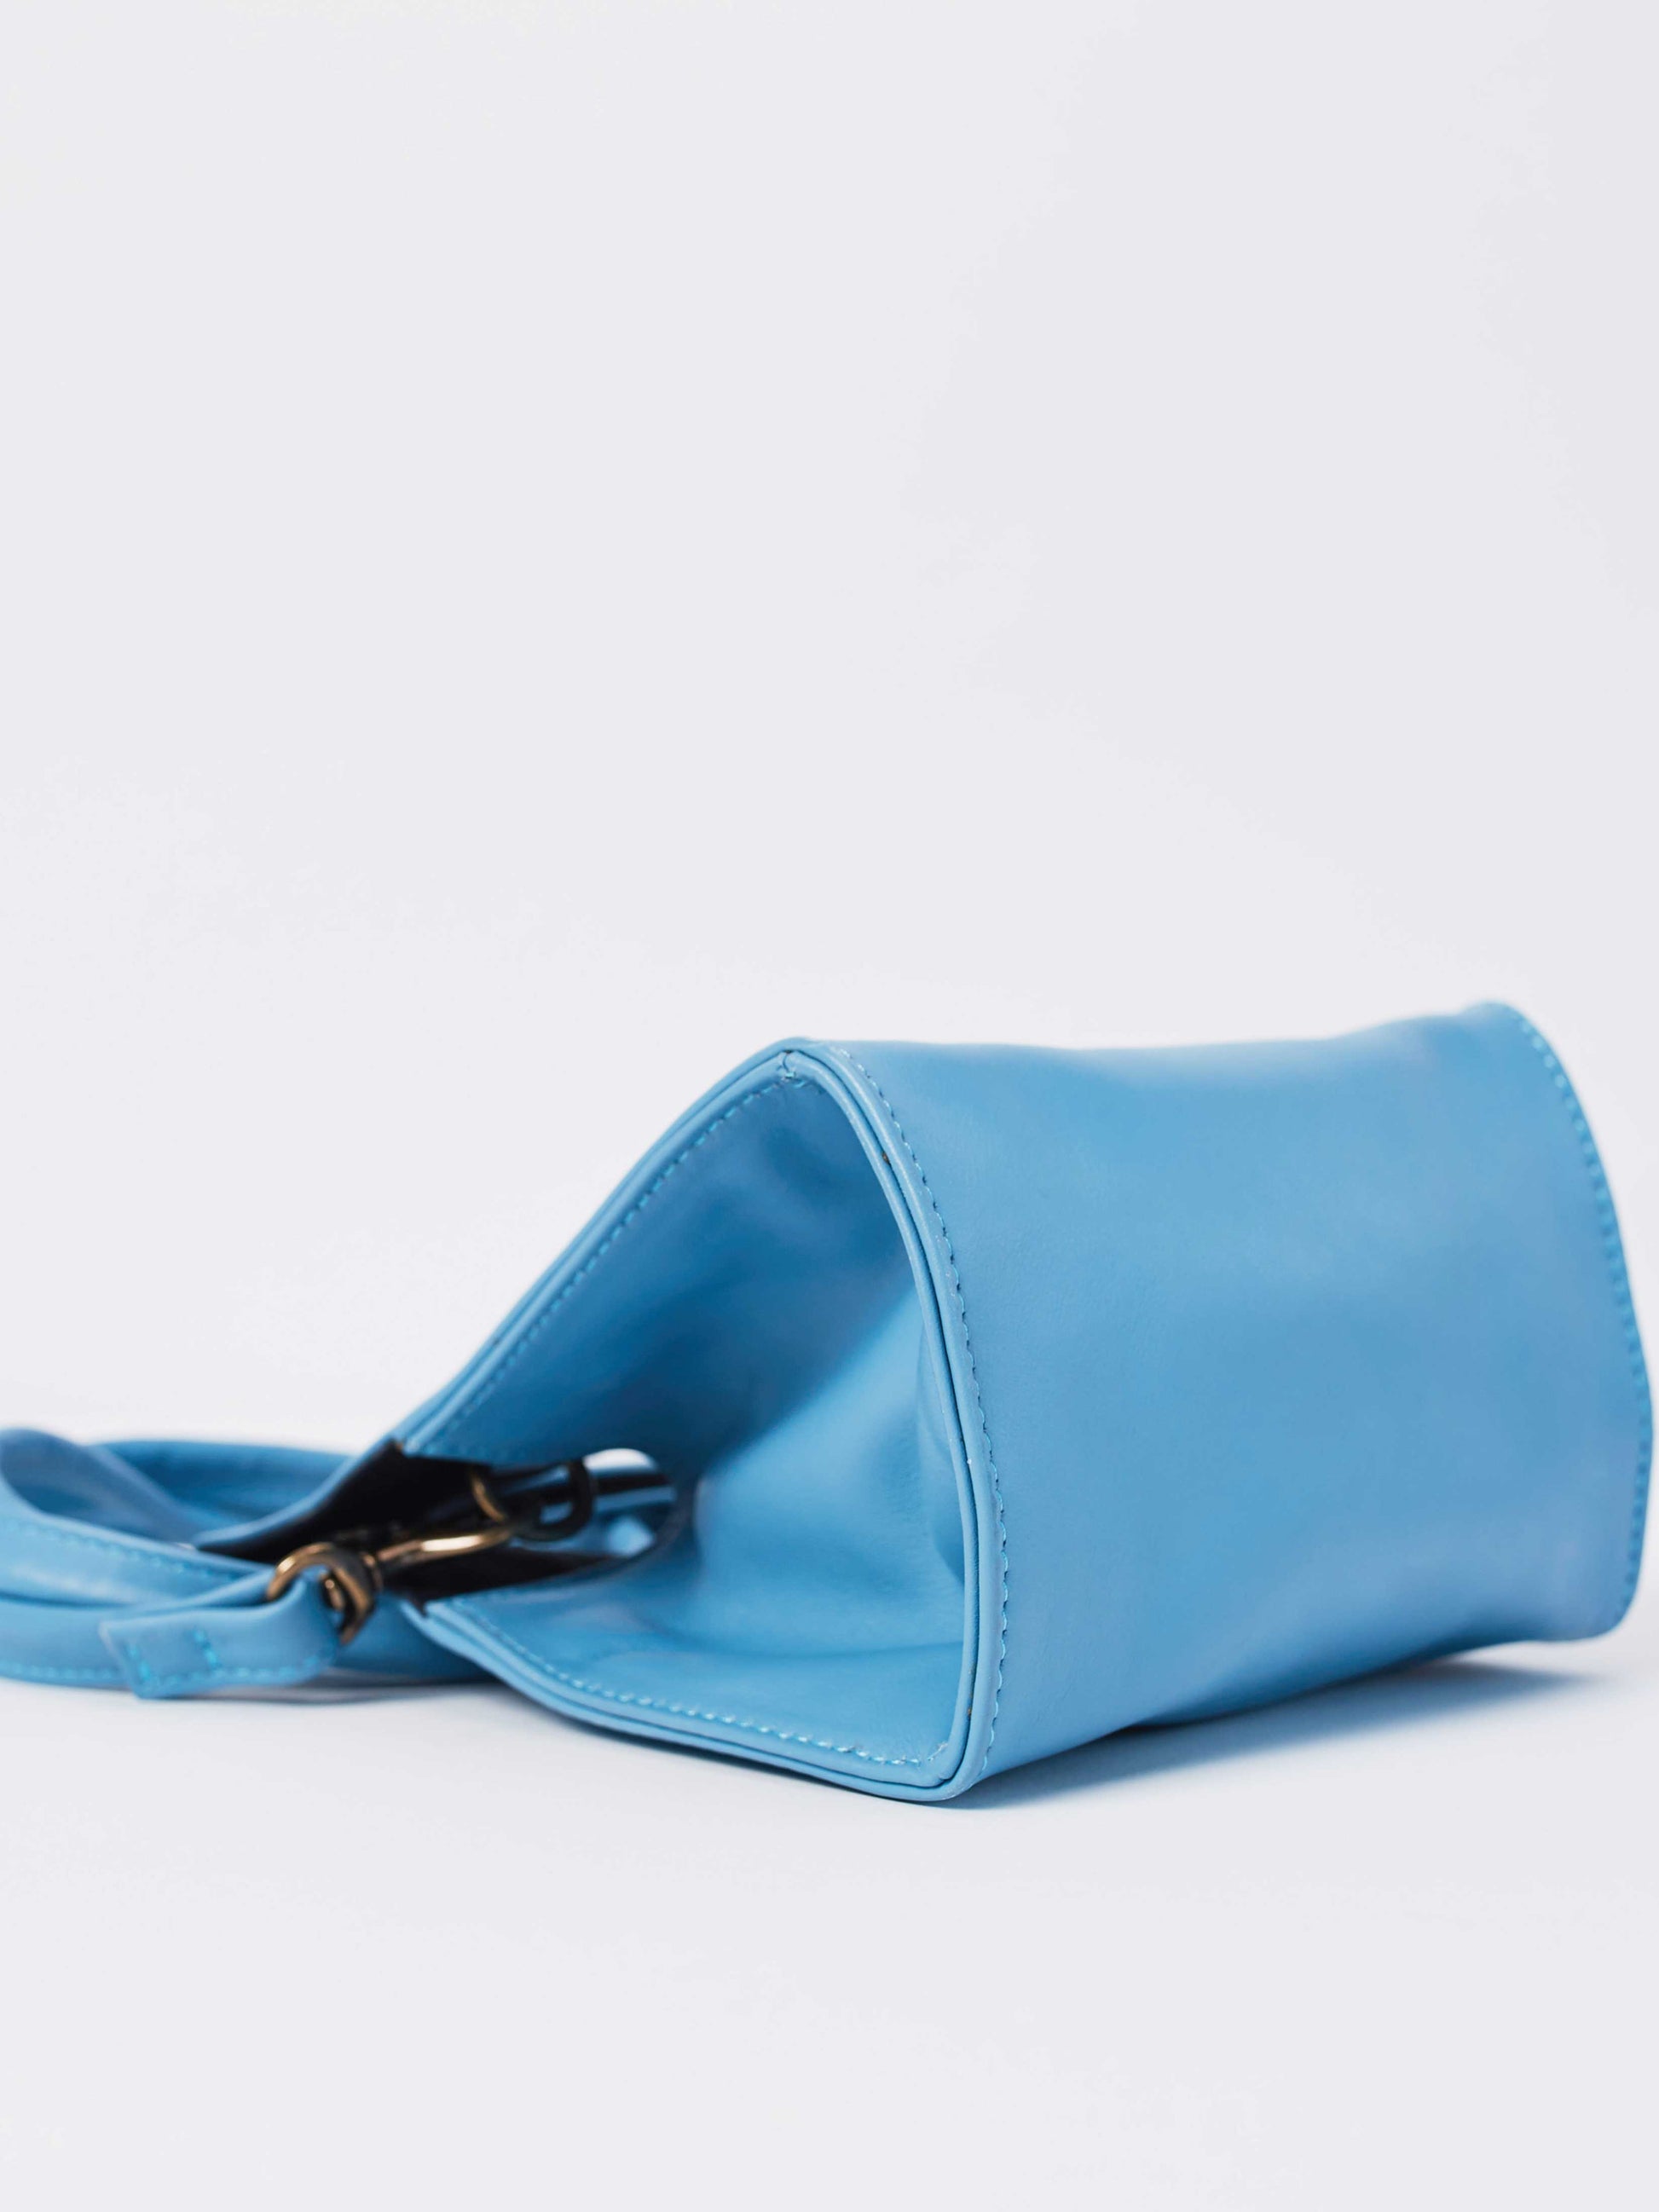 Leather- Crossbody Handbag- Vintage Blue Mini Party Crossbody bag-by-PaytonJames-Nashville-designer side view of bag